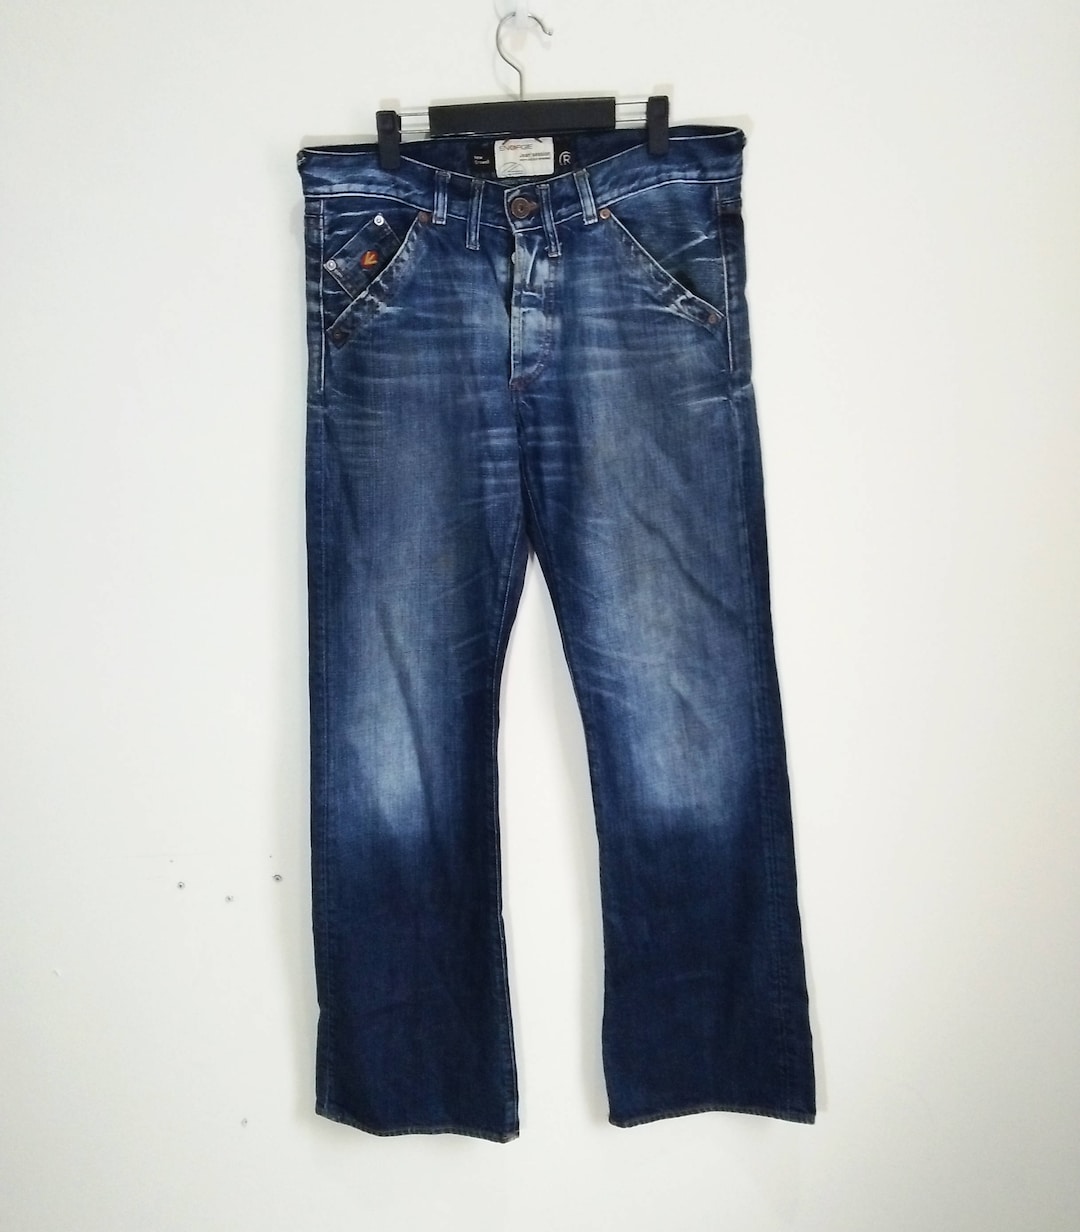 ENERGIE Worn Out & Distressed Denim Jeans Pants Men's Italian Designer ...